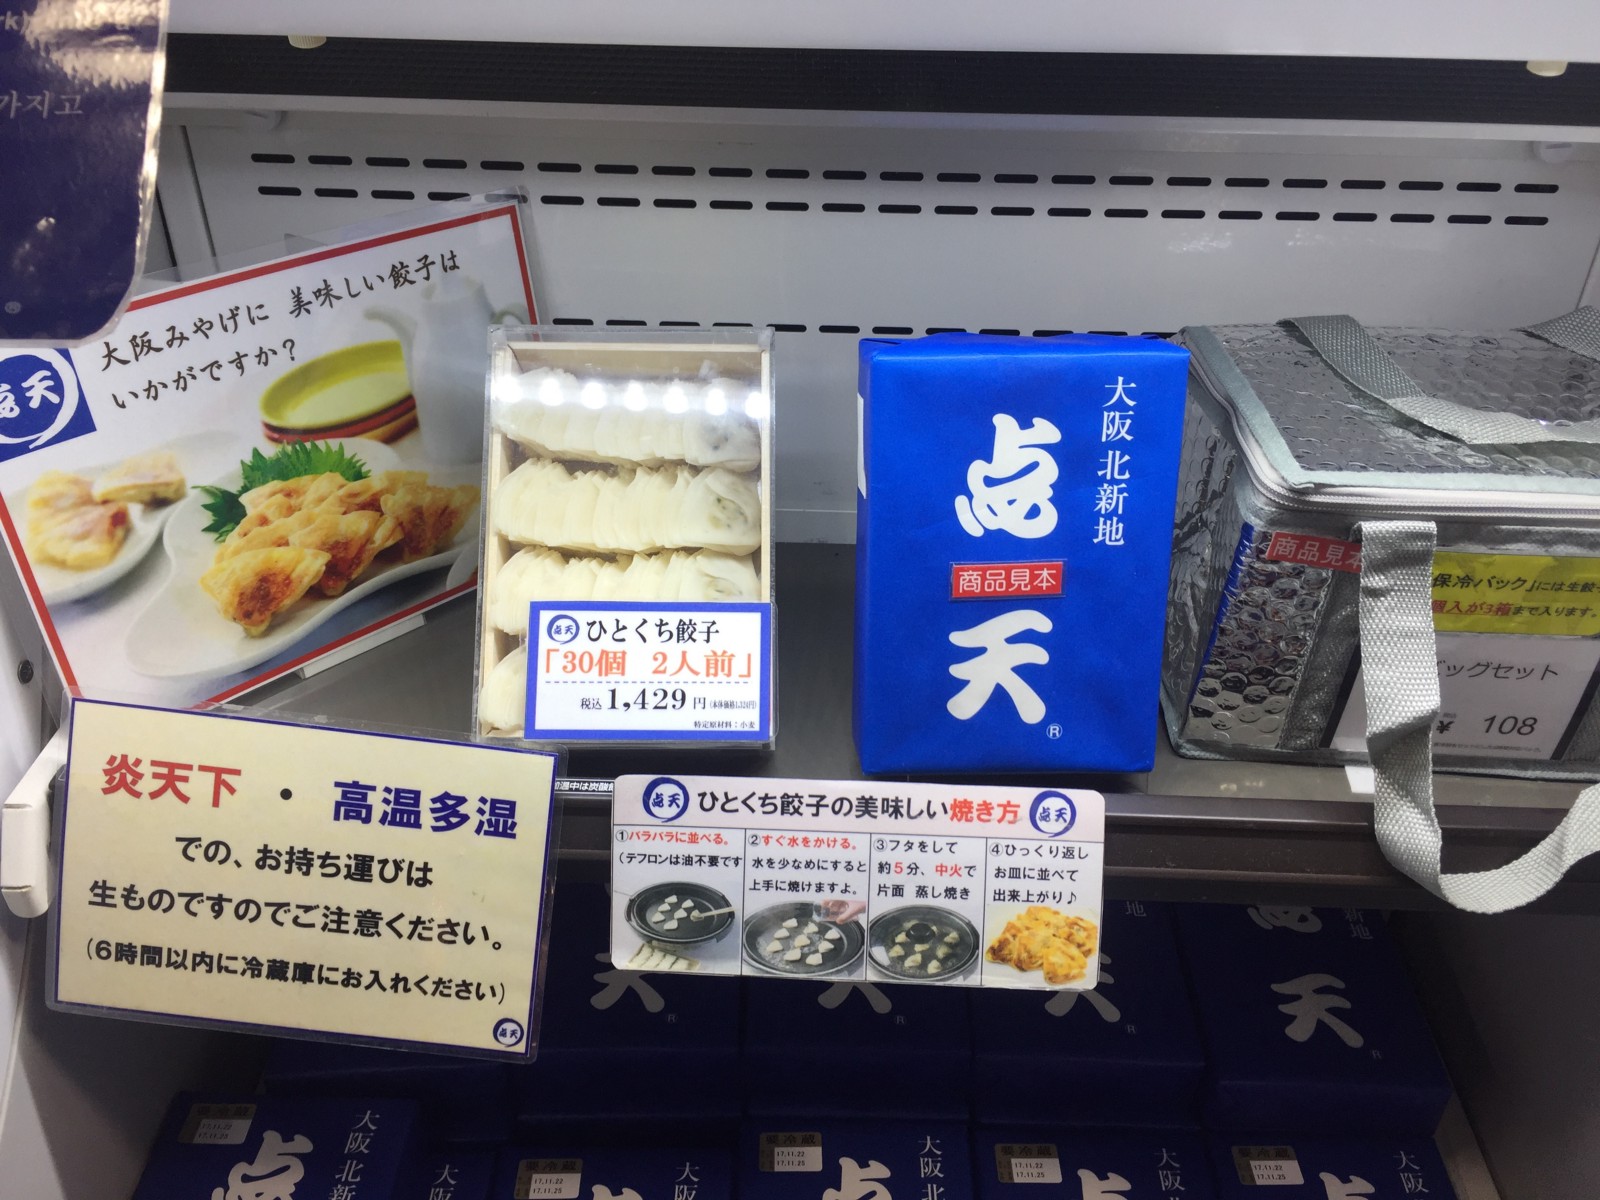 Ten Ten, delicious bite-size Gyoza from Osaka